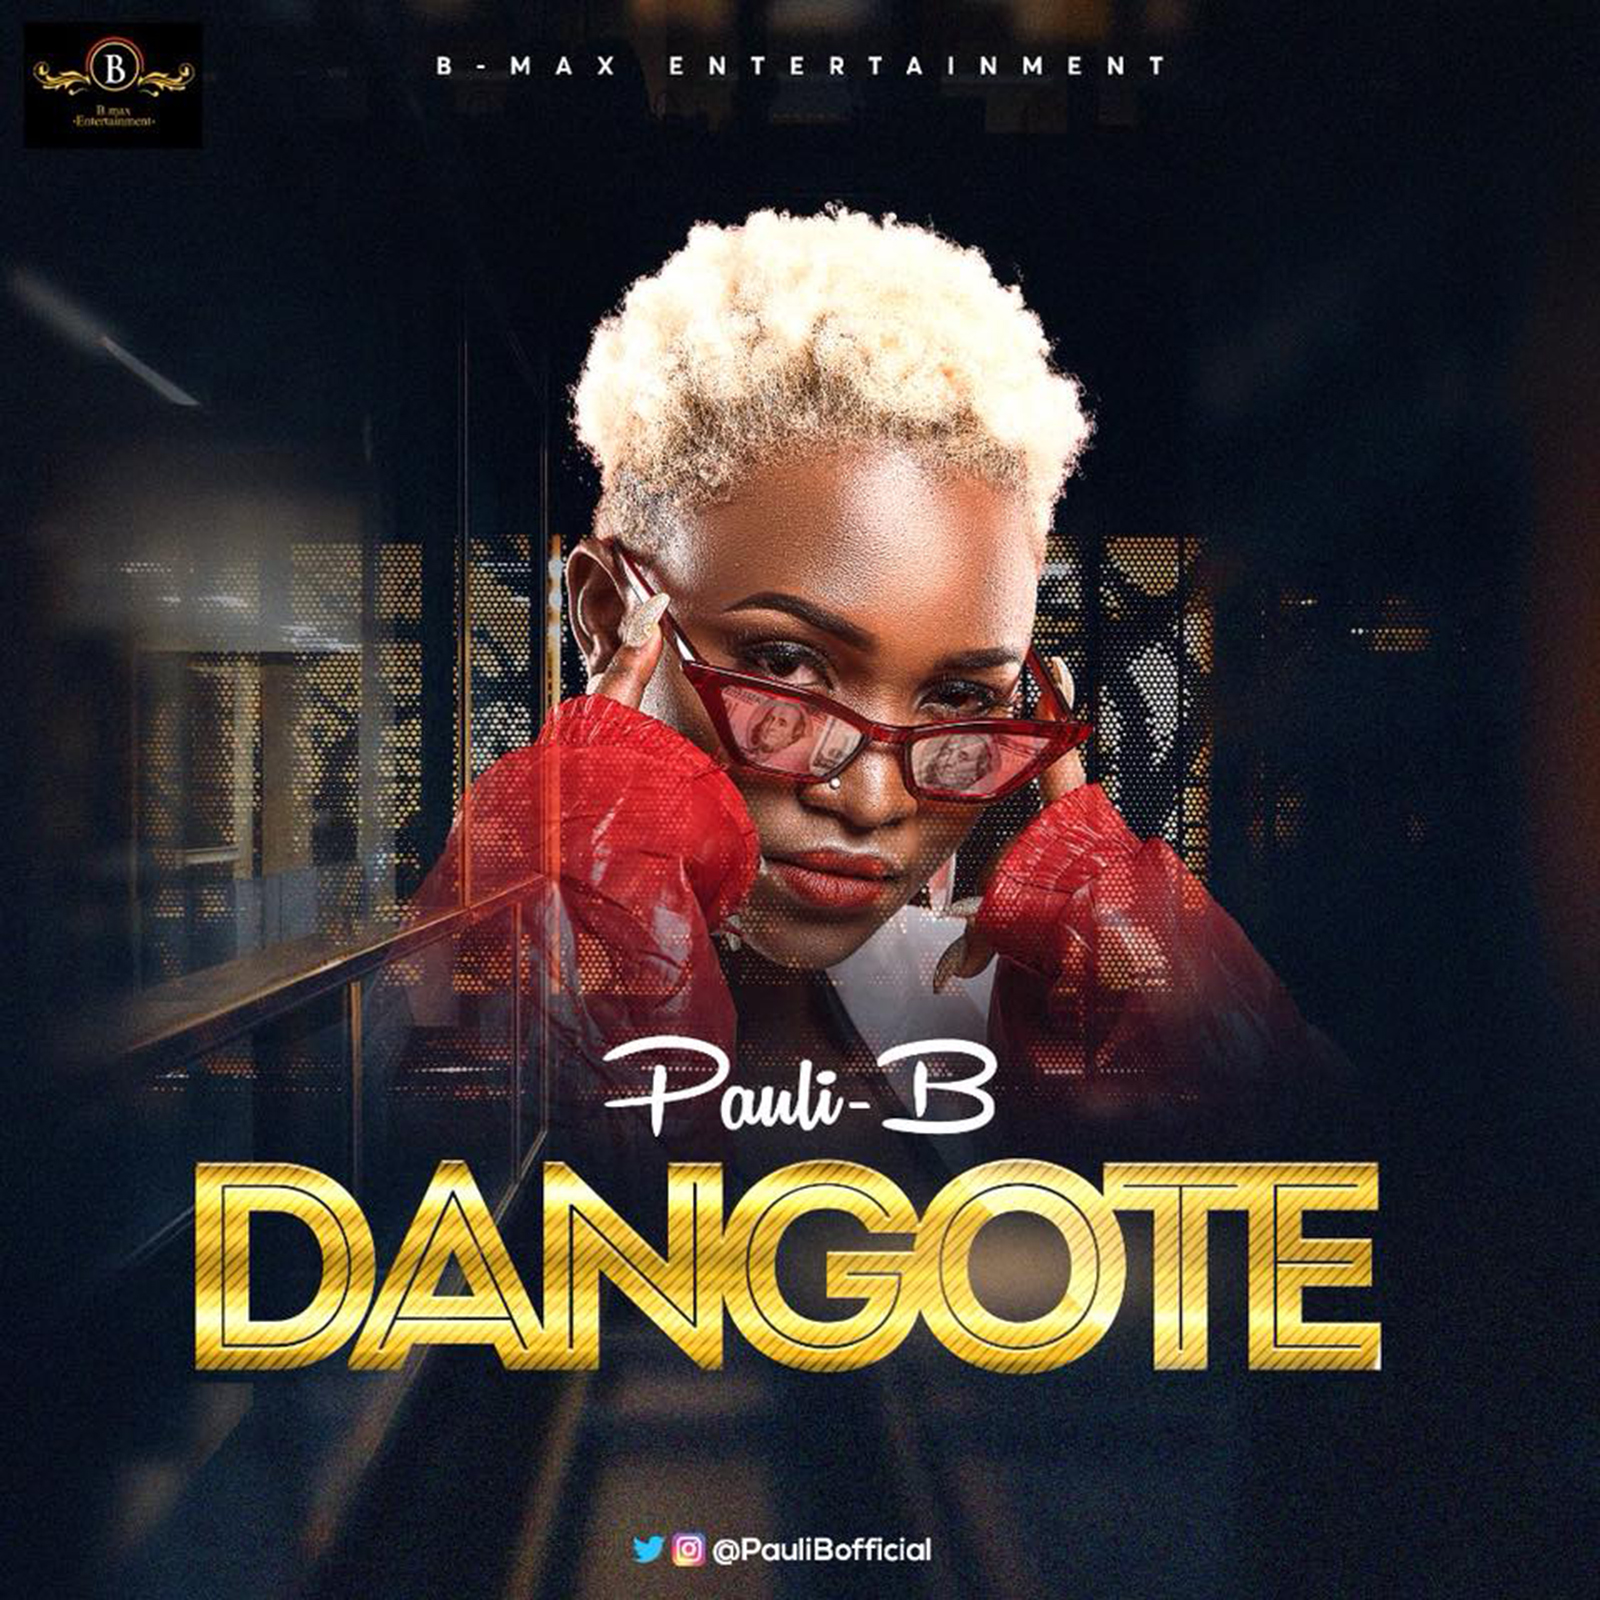 Dangote by Pauli-B